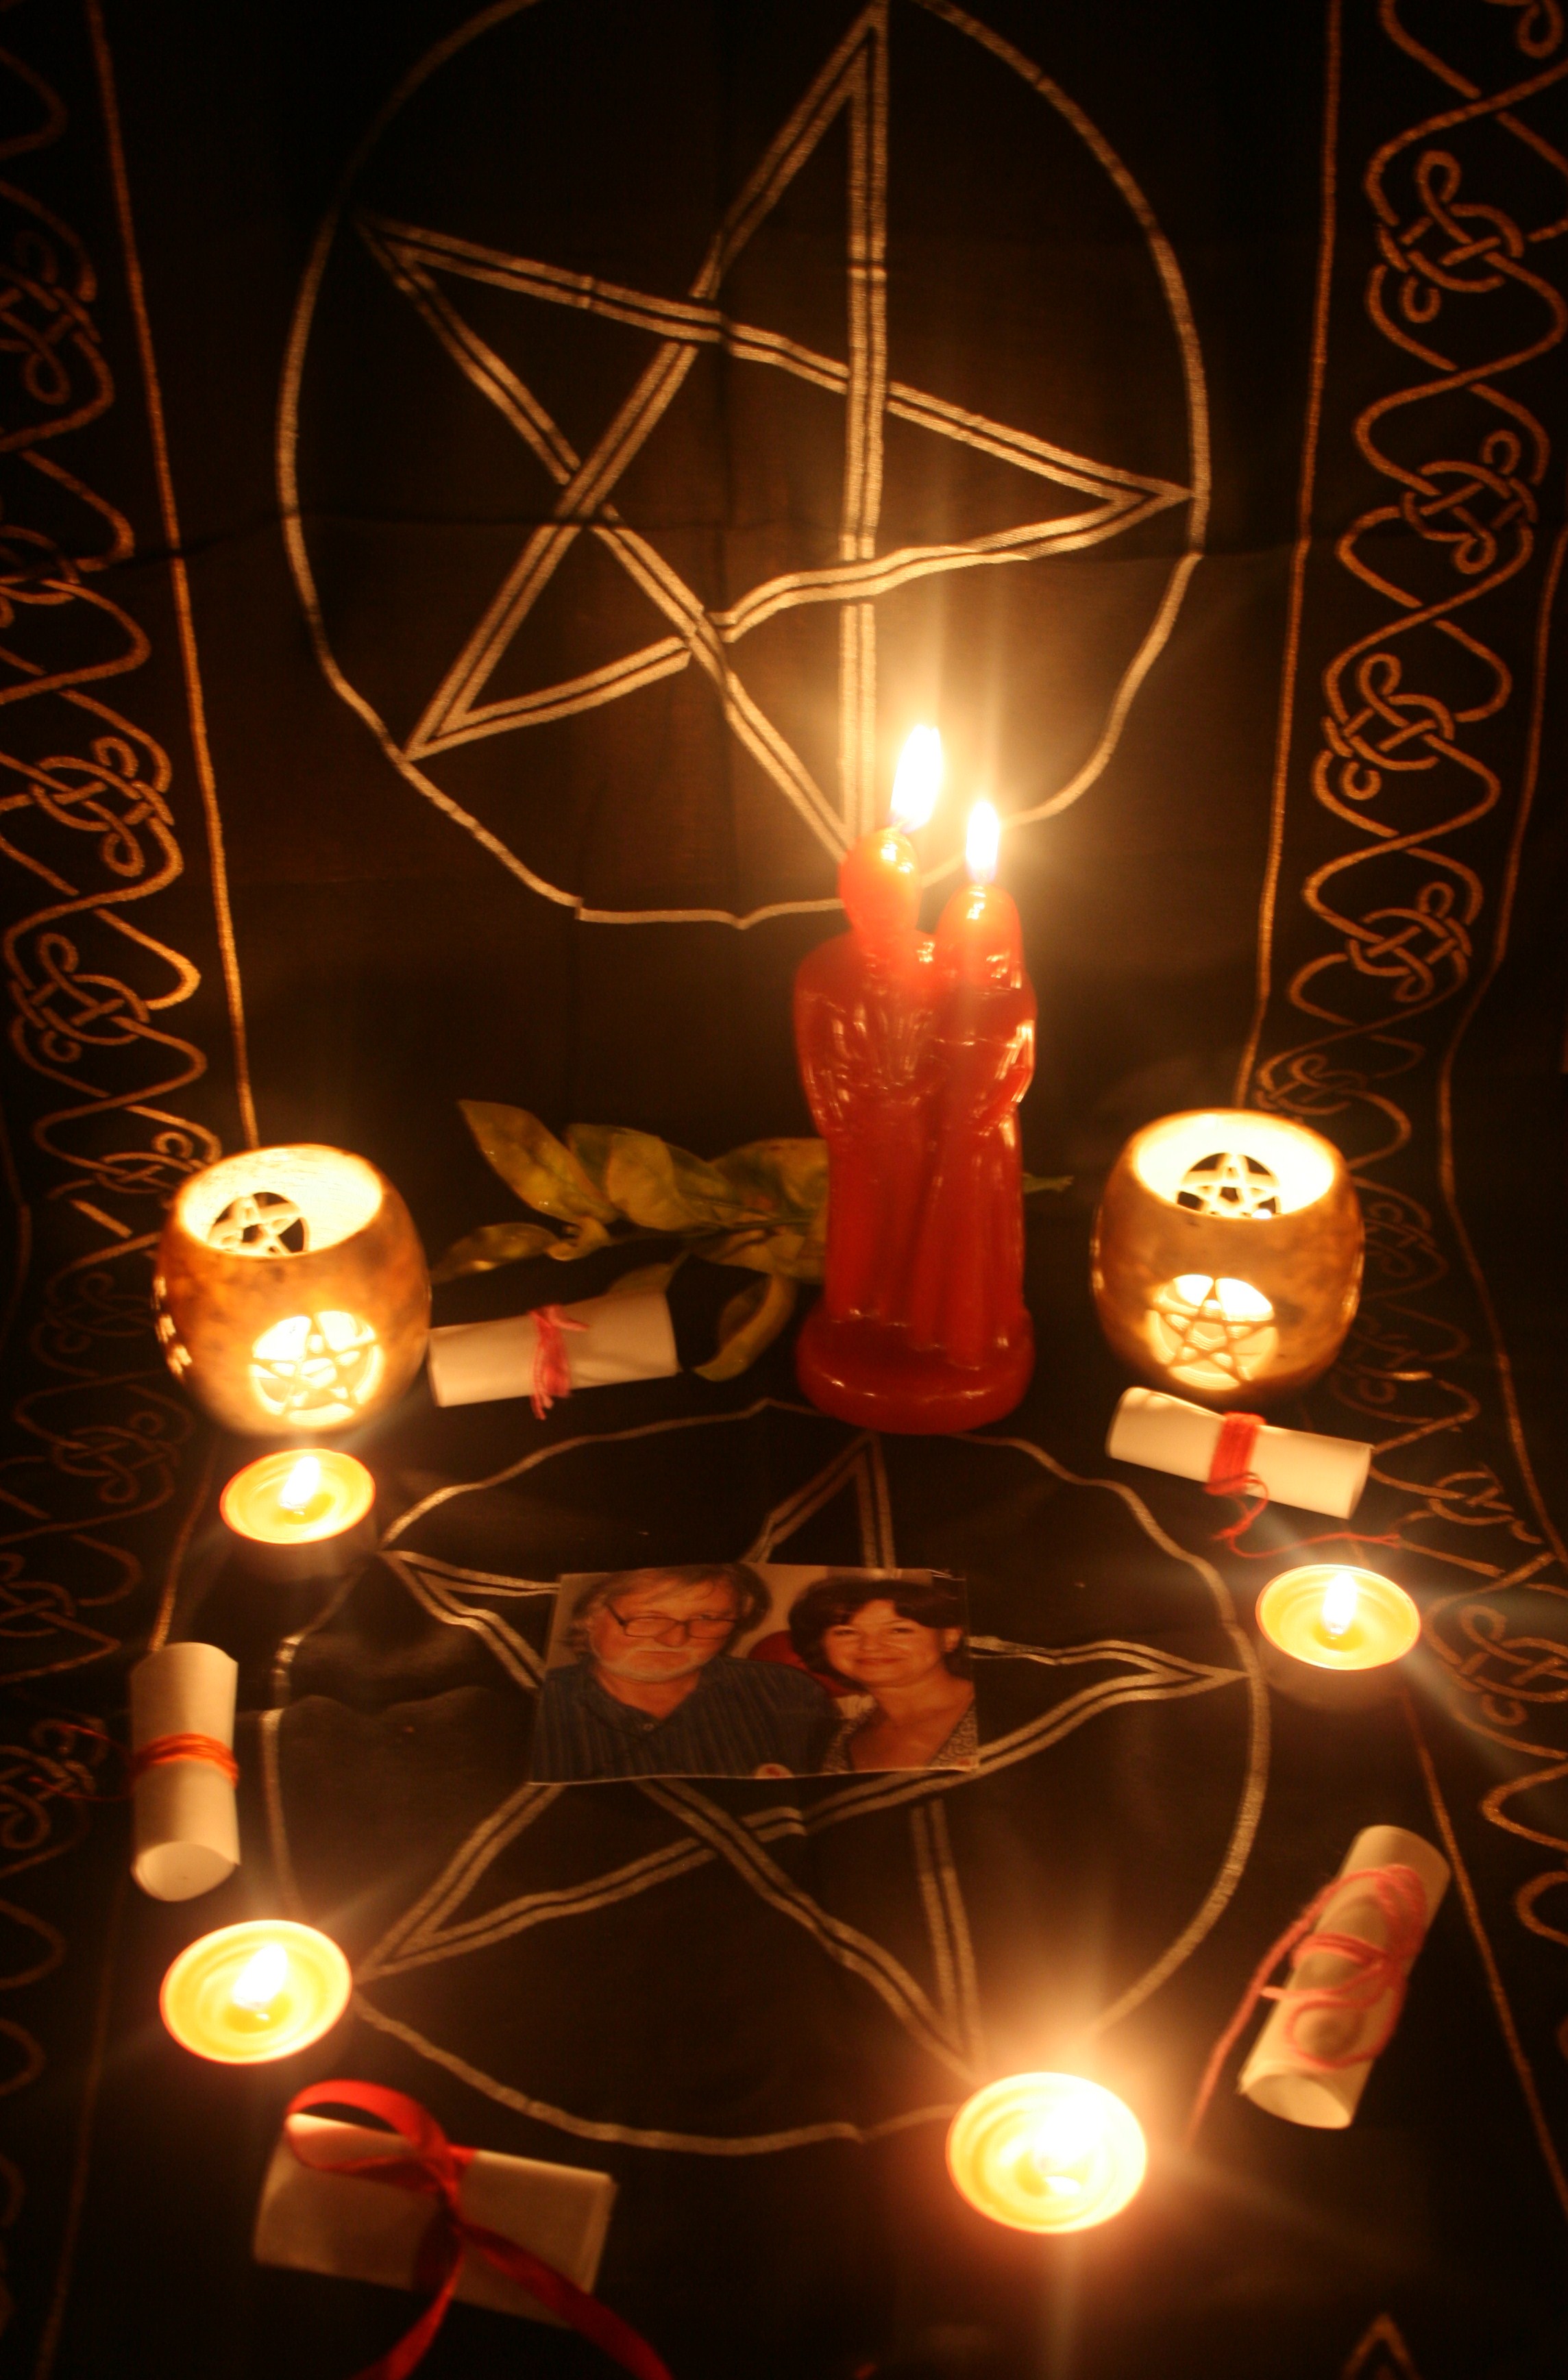 black magic wallpaper,lighting,light,candle,room,event